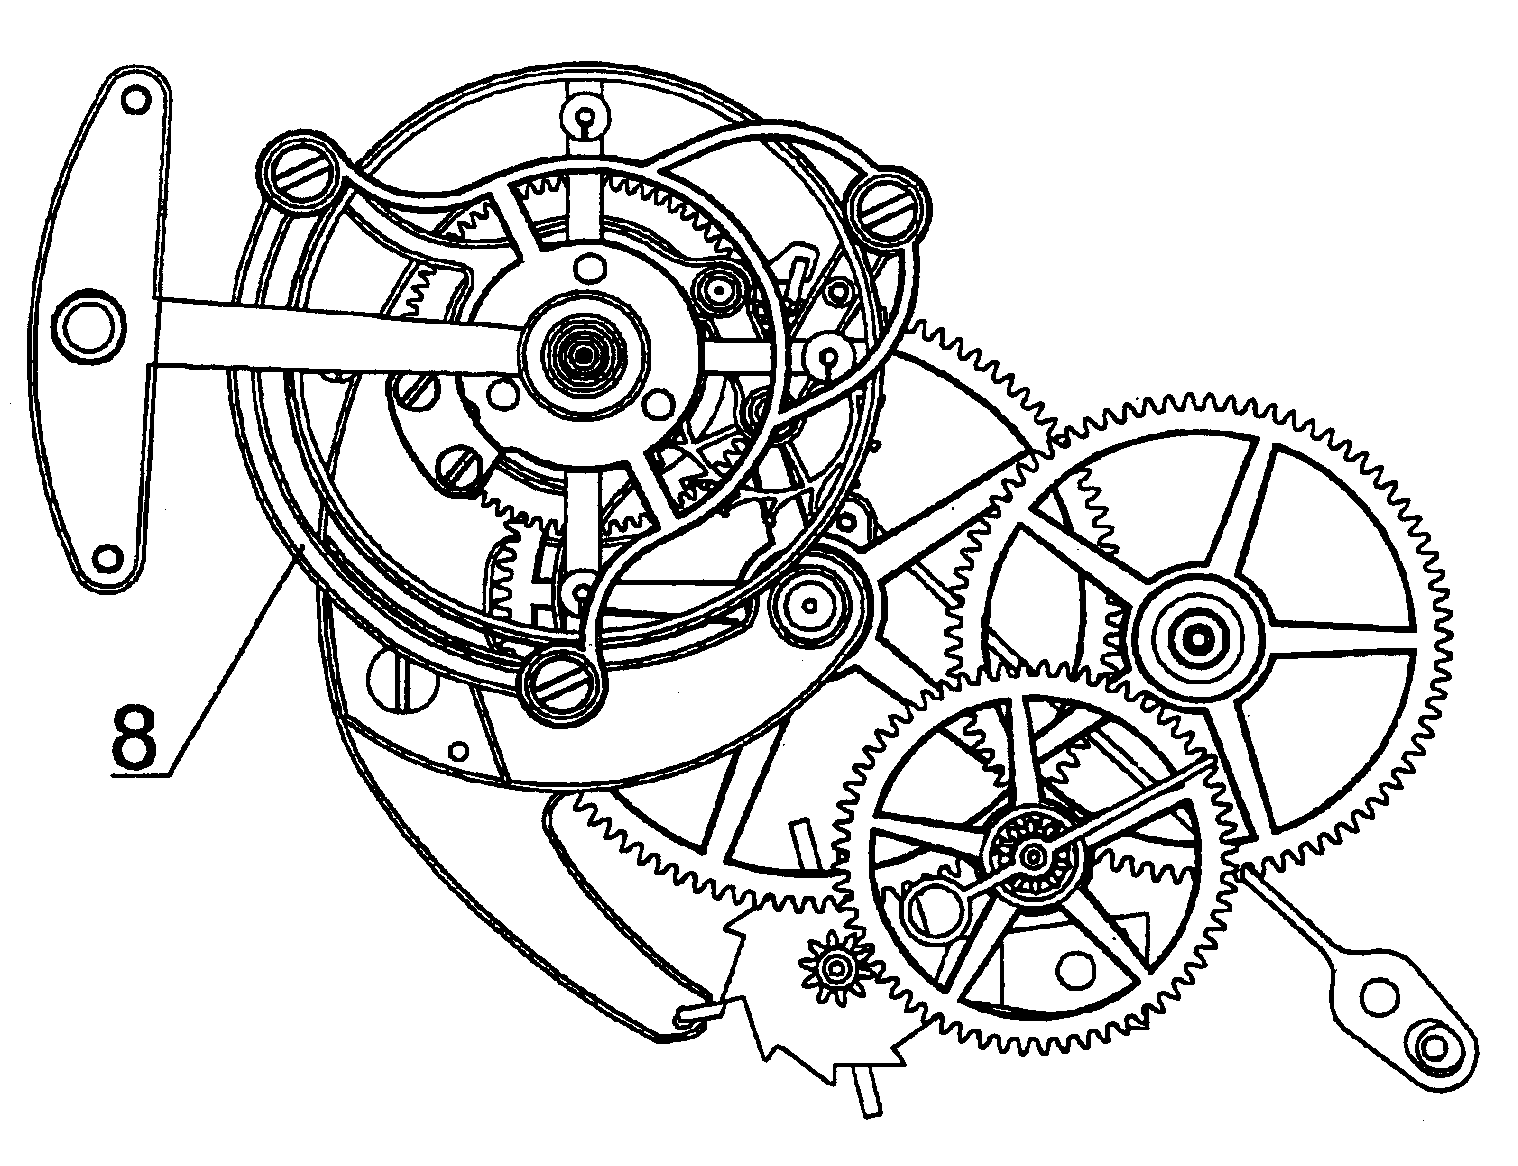 Mechanical timepiece